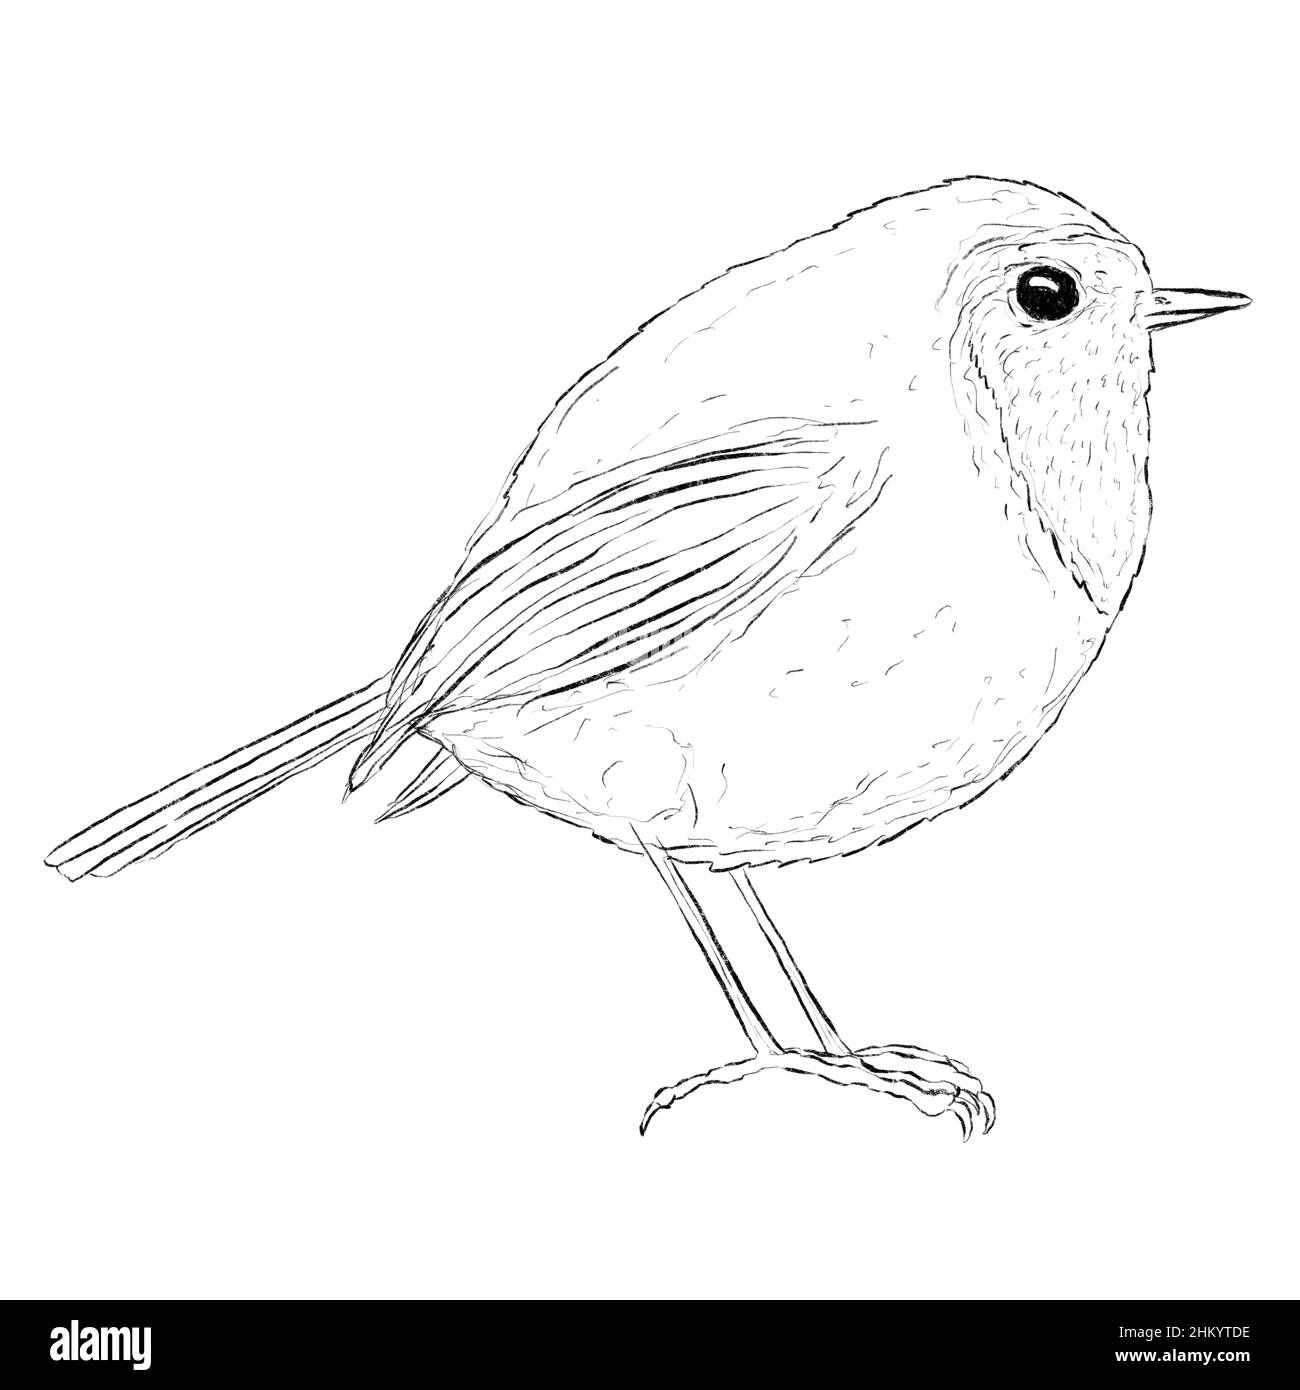 Robin Bird Line Art Logo that is Pencil Drawn on White Background Stock Photo